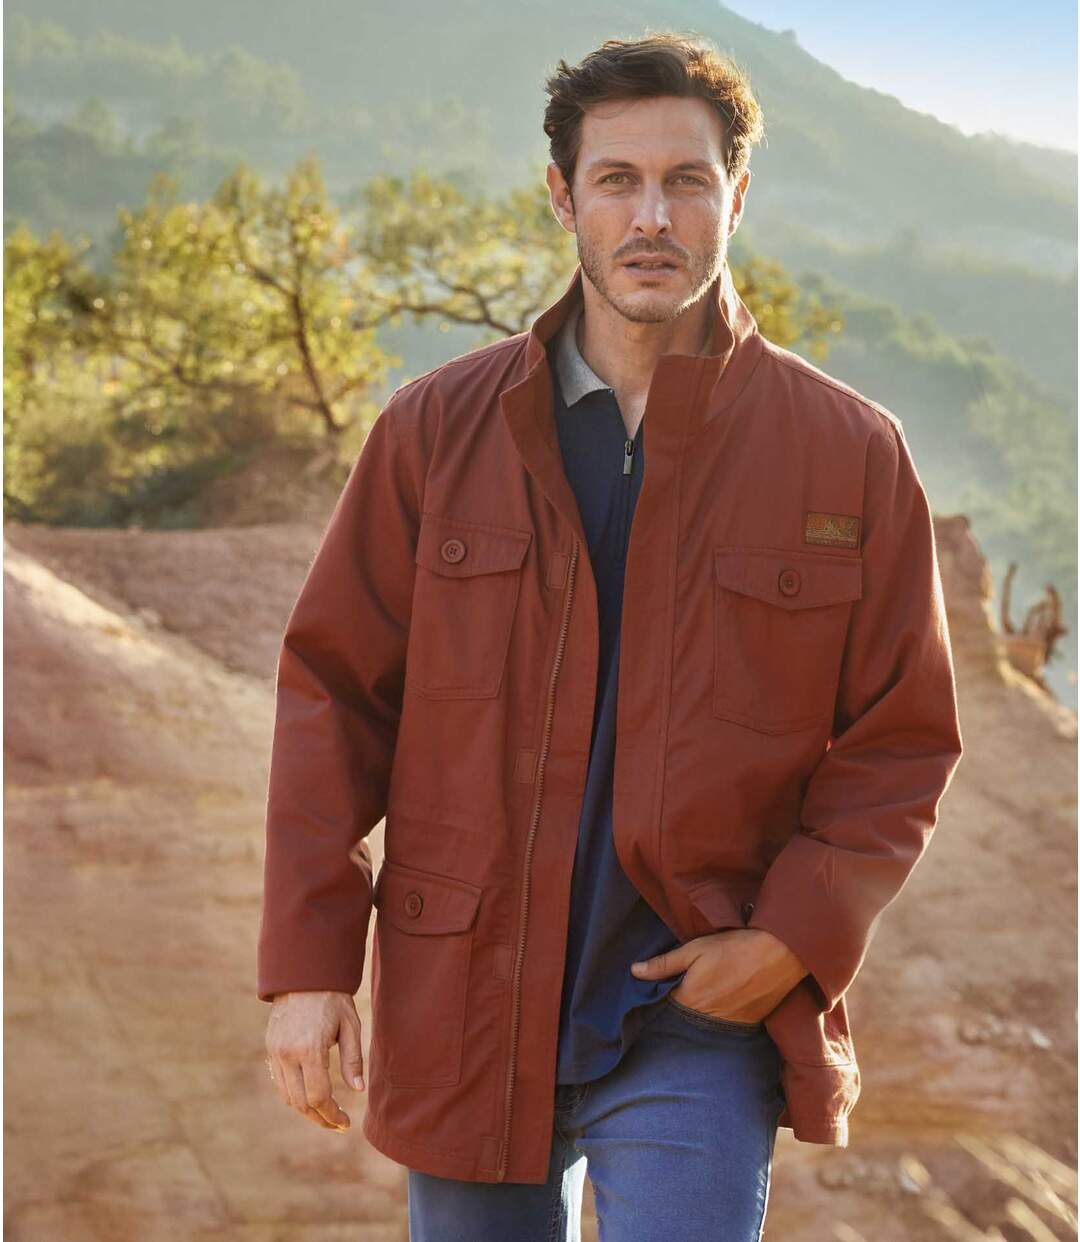 Men's Full Zip Red Safari Jacket Atlas For Men